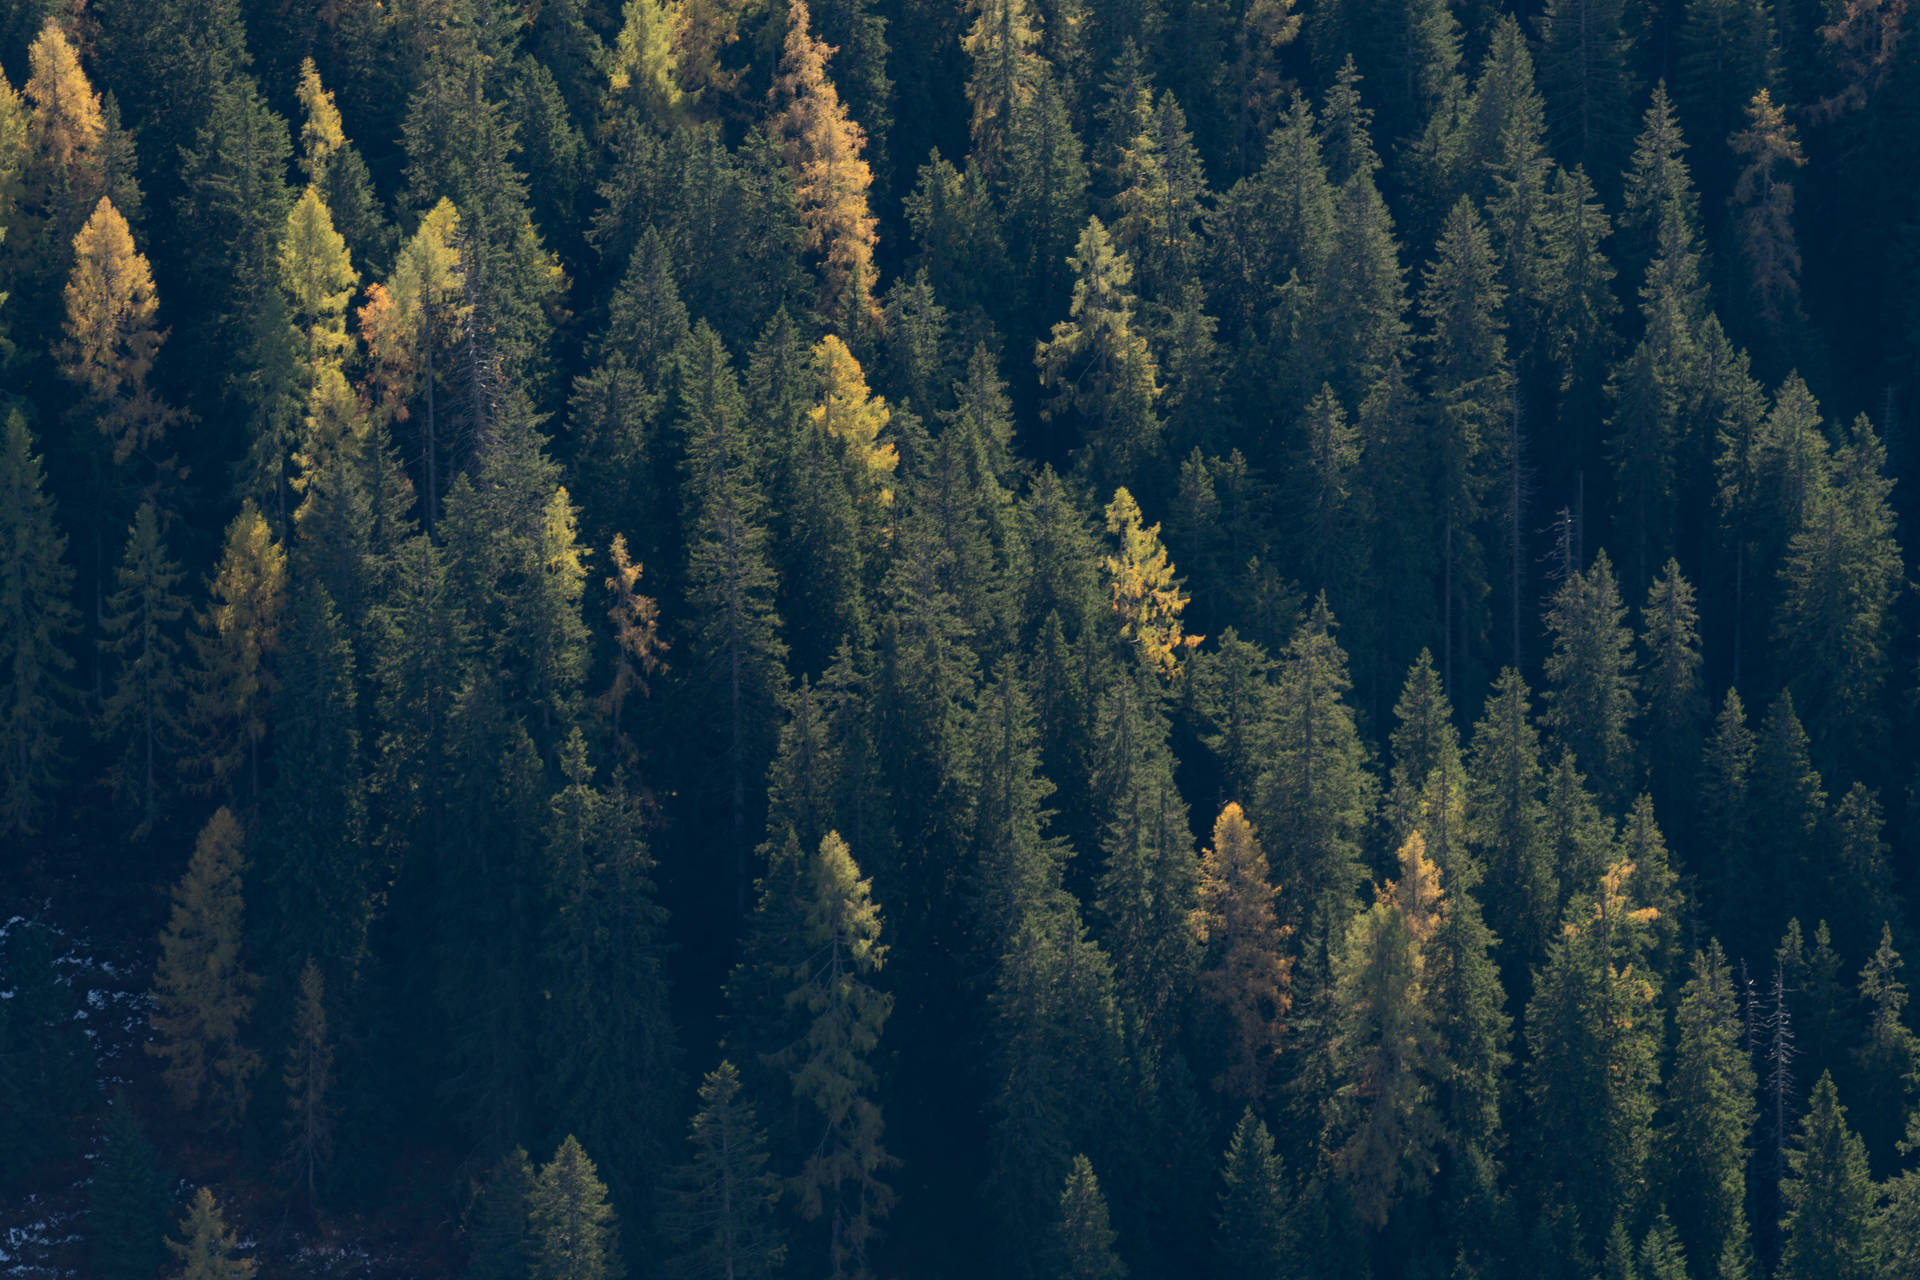 A peaceful yet mysterious walk through a dark spruce forest. Wallpaper